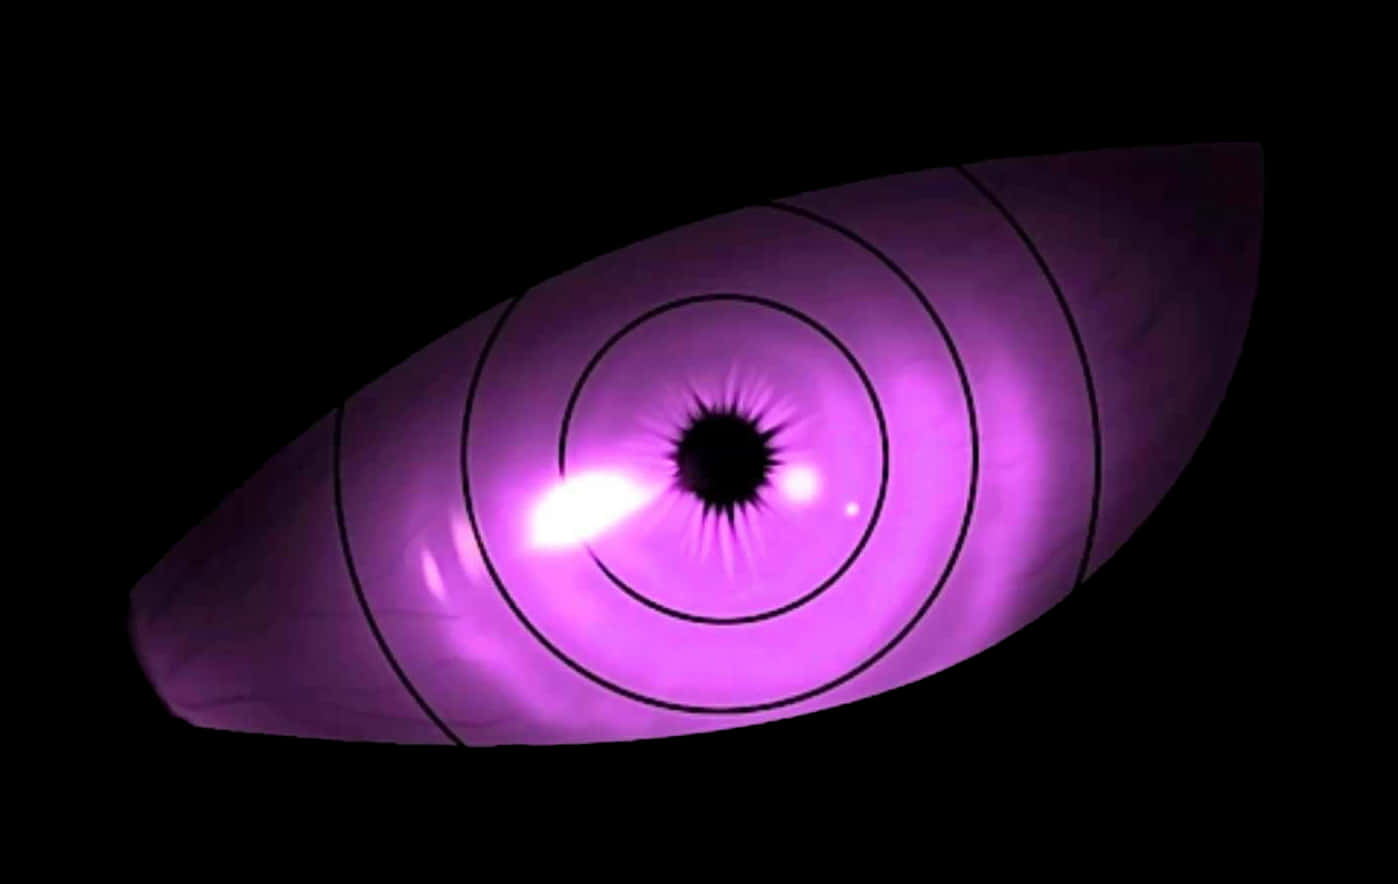 A Purple Eyeball With Black Circles